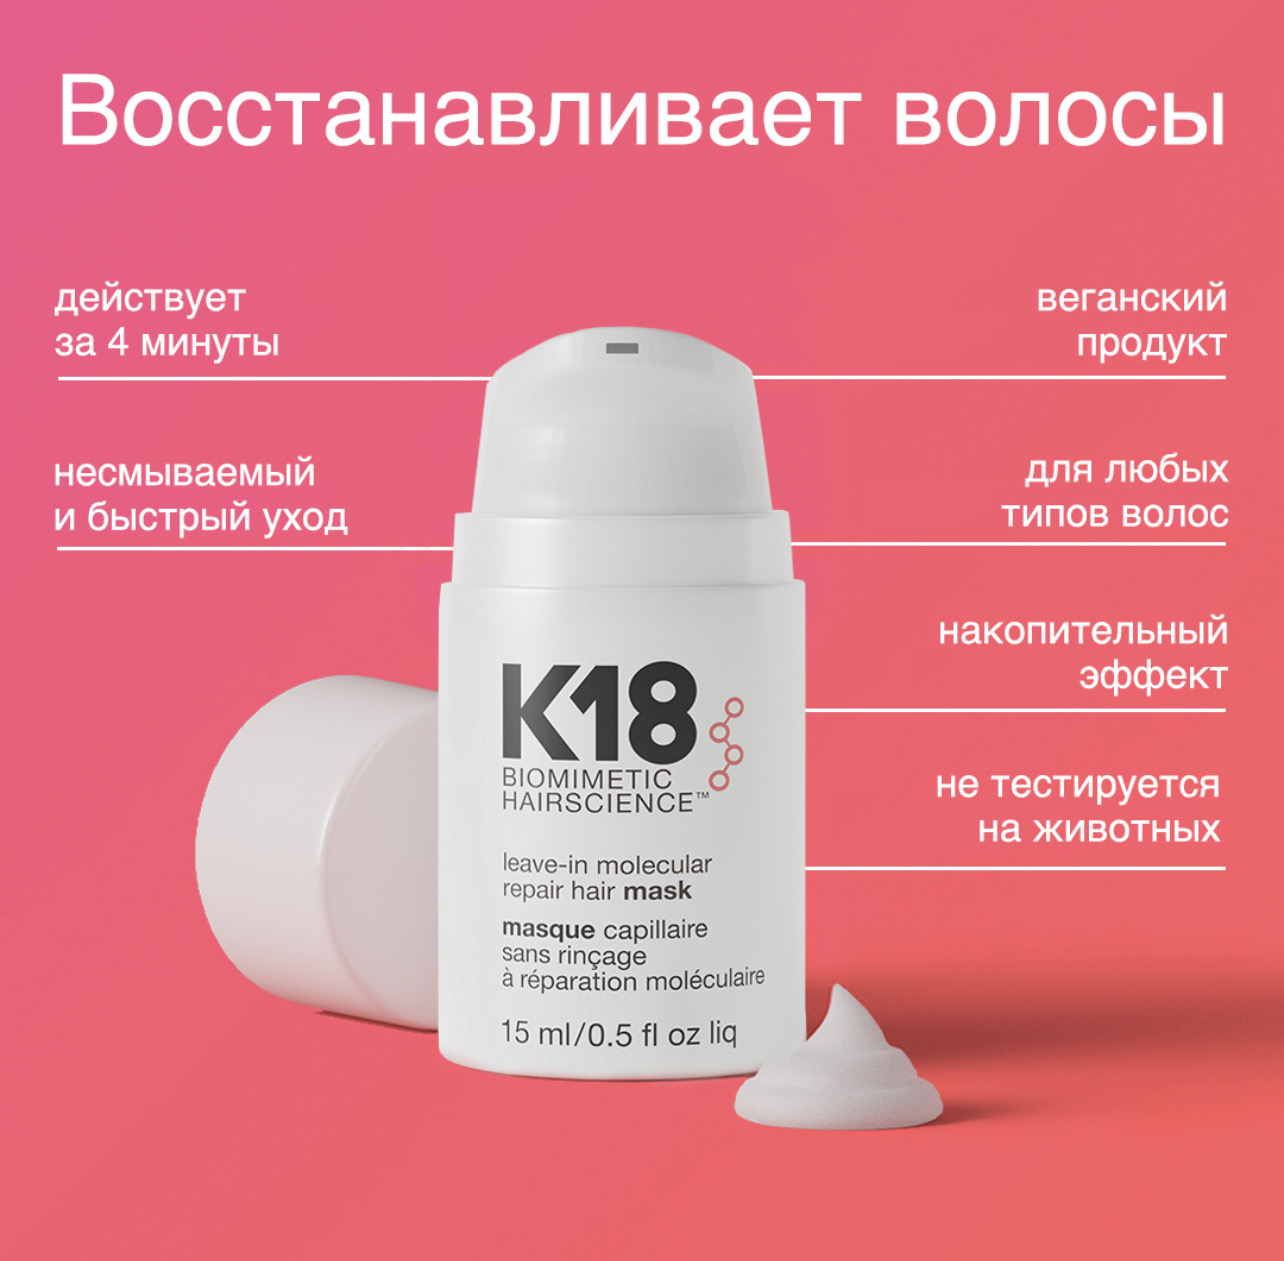 Маска для волос молекулярное восстановление. K18 leave-in Molecular Repair hair Mask. K18 маска. Маска для молекулярного восстановления волос. K18 несмываемая маска для молекулярного восстановления волос.